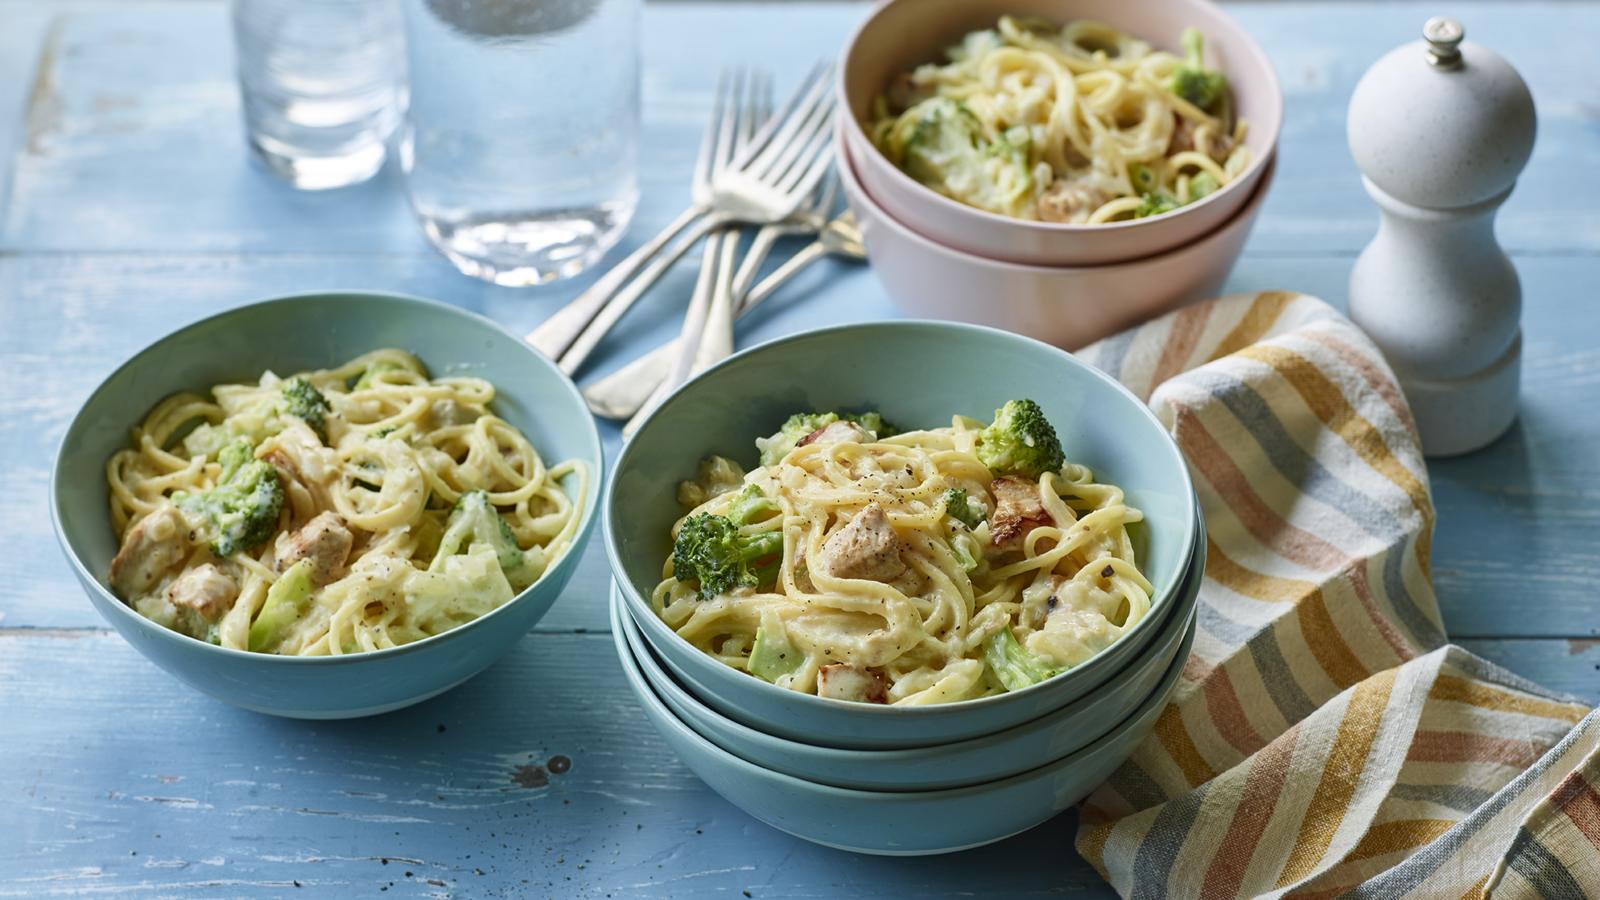 Cheesy turkey and broccoli spaghetti